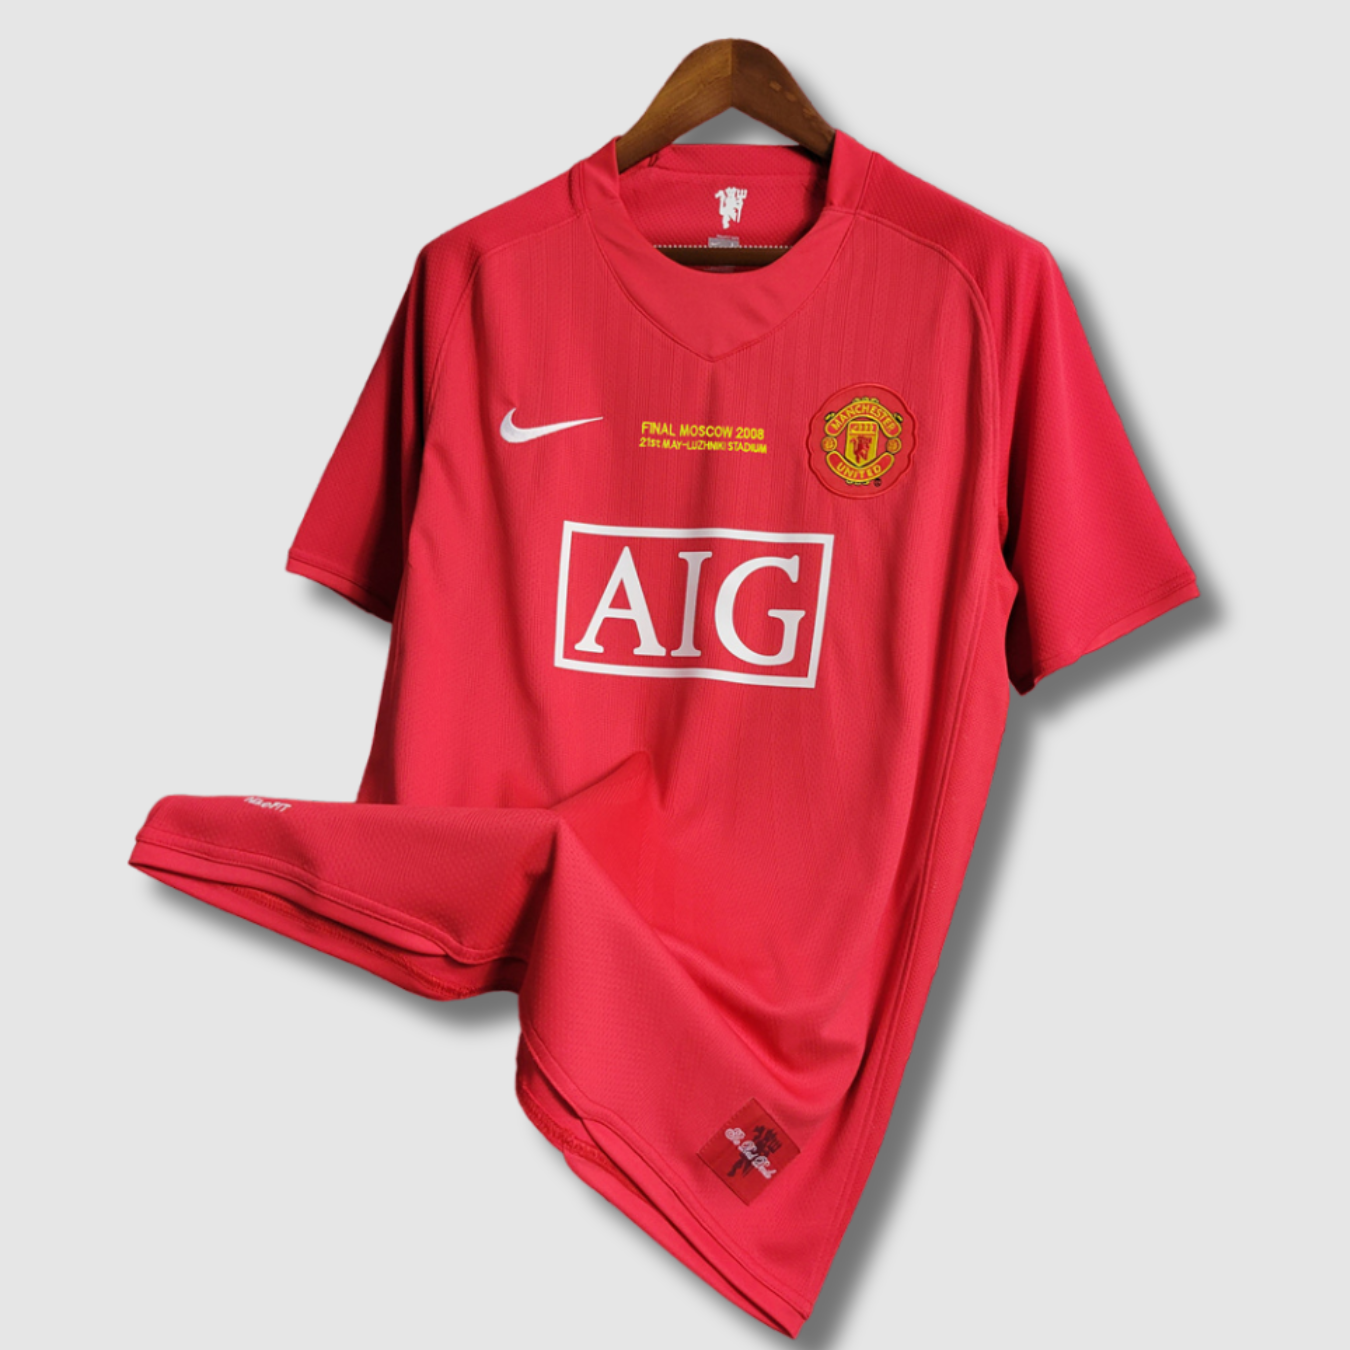 2007/08 Manchester United Champions League Final Retro Kit